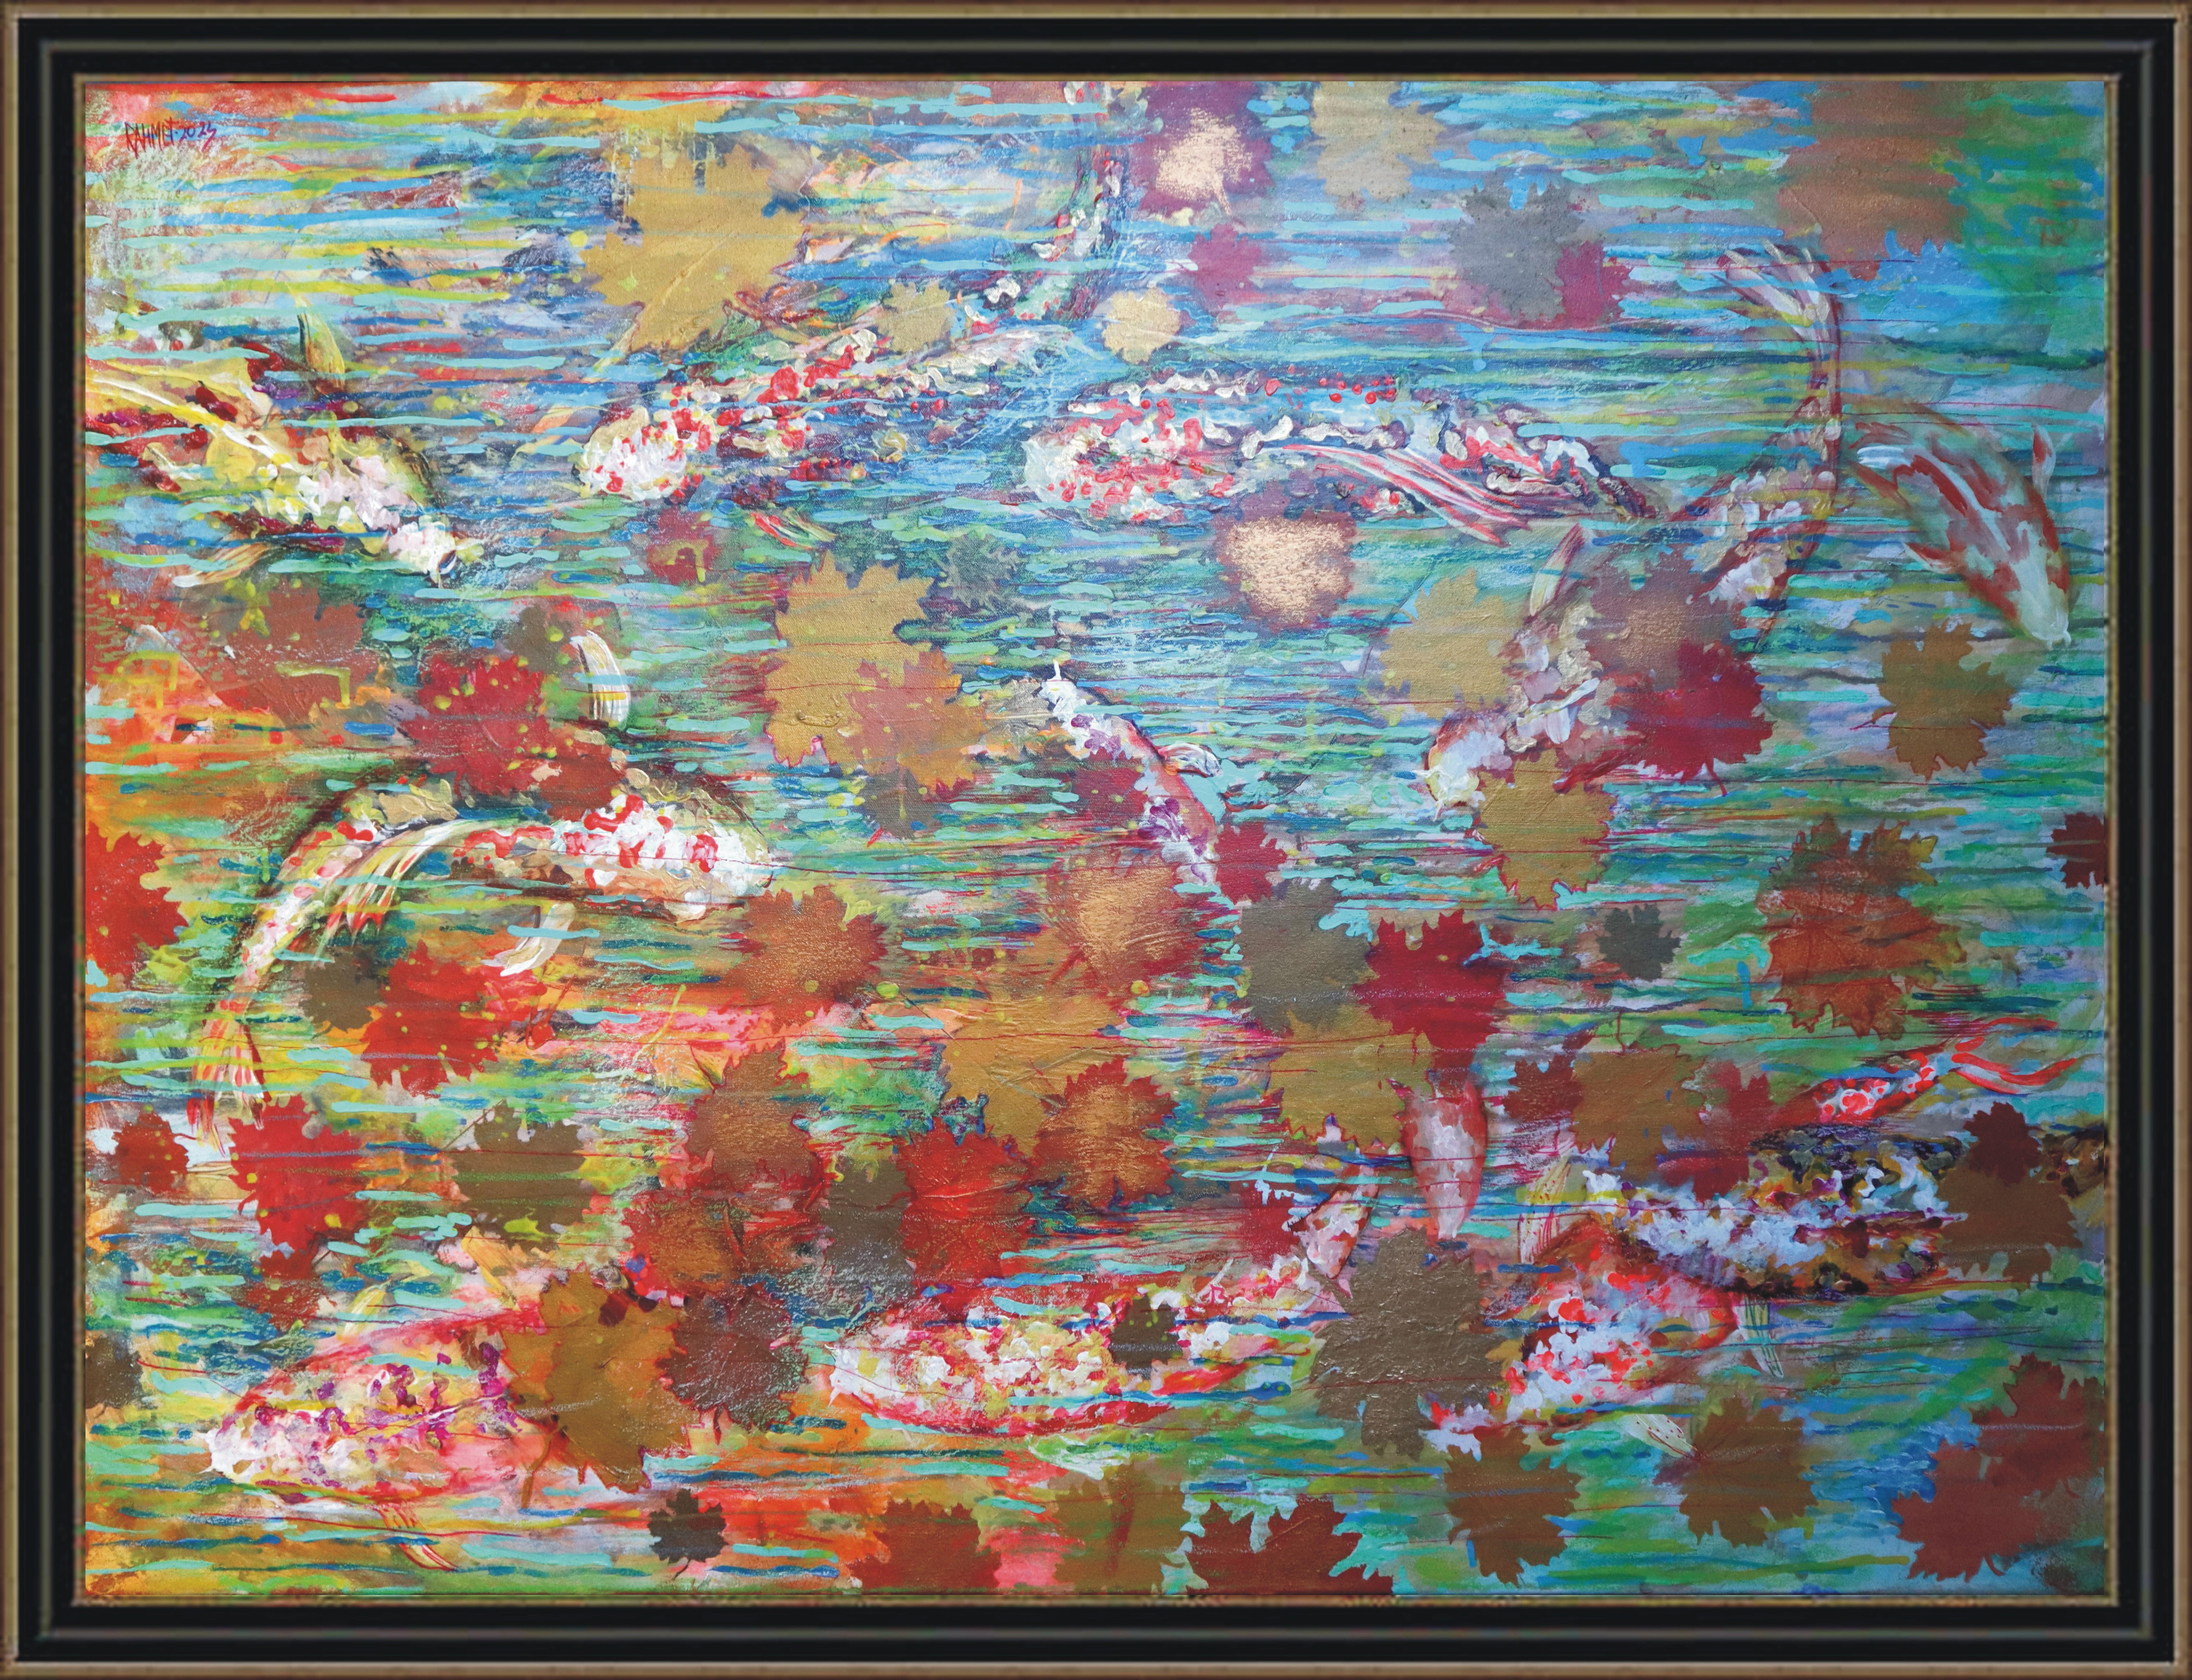 Koi Fish in a Slow Flowing River - Painting by RAKHMET REDZHEPOV (RAMZI)